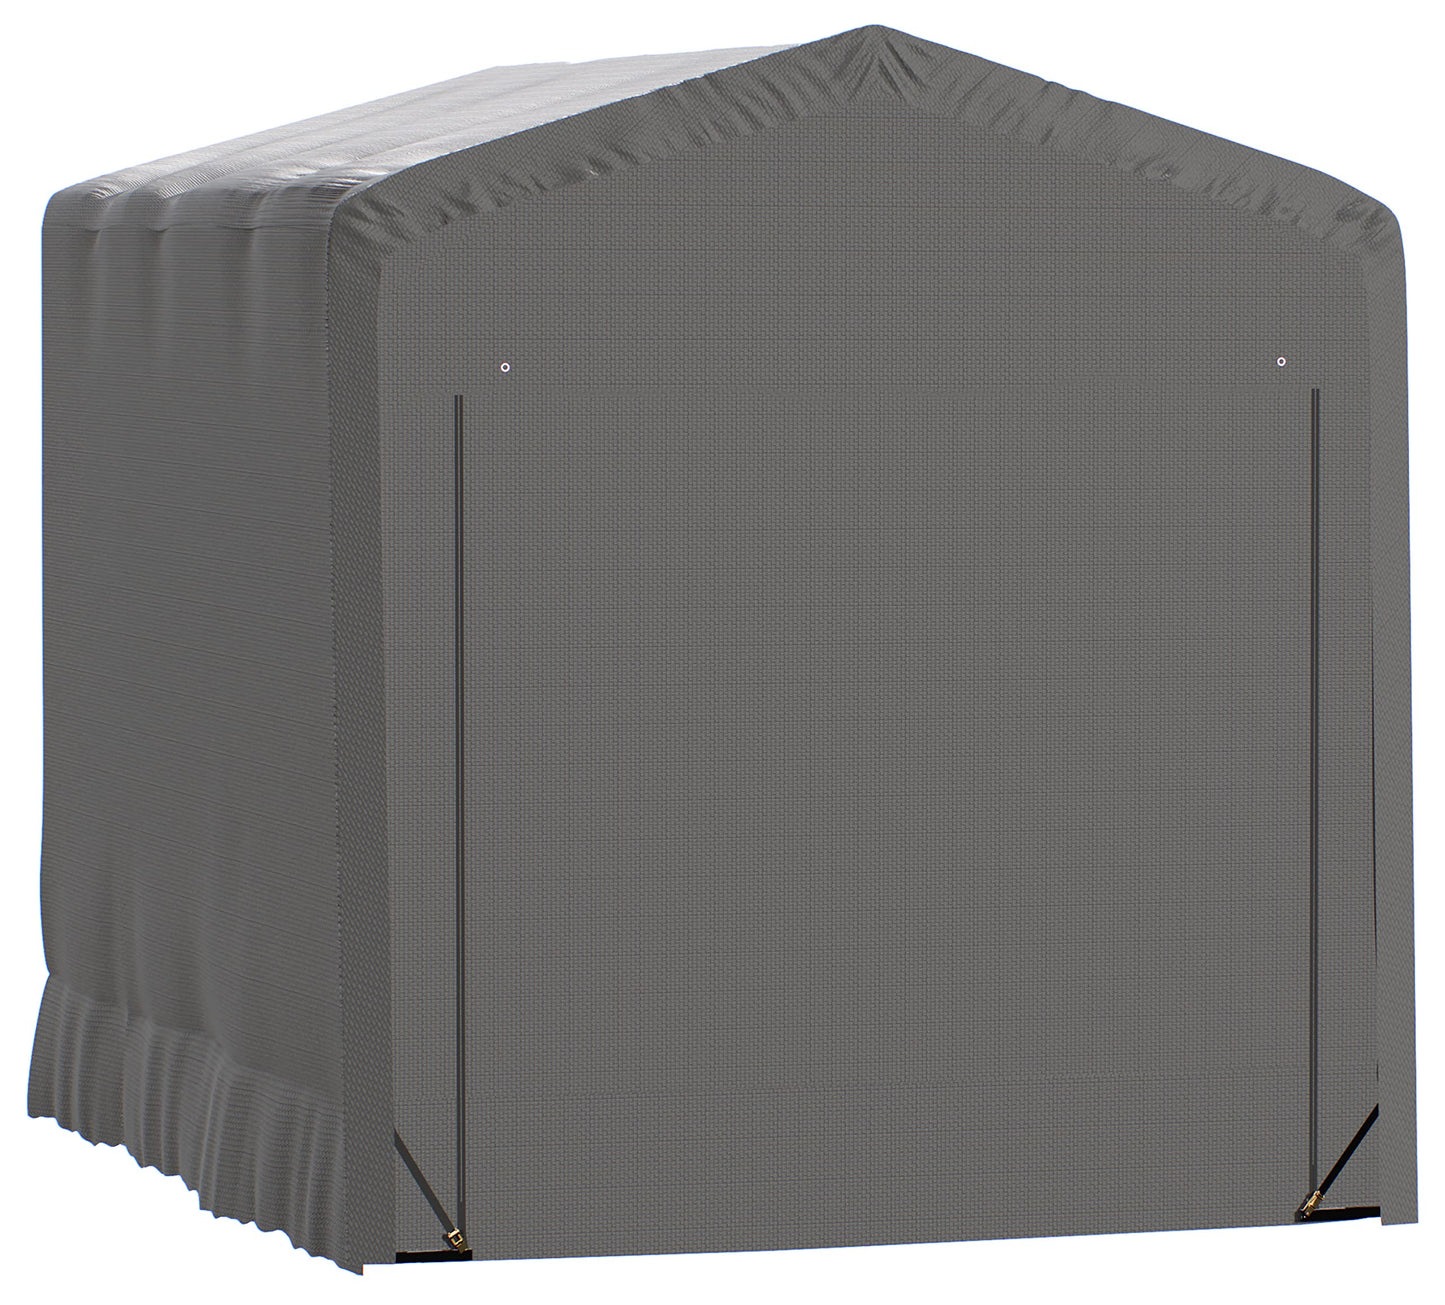 ShelterLogic ShelterTube Garage & Storage Shelter, 14' x 18' x 16' Heavy-Duty Steel Frame Wind and Snow-Load Rated Enclosure, Gray 14' x 18' x 16'